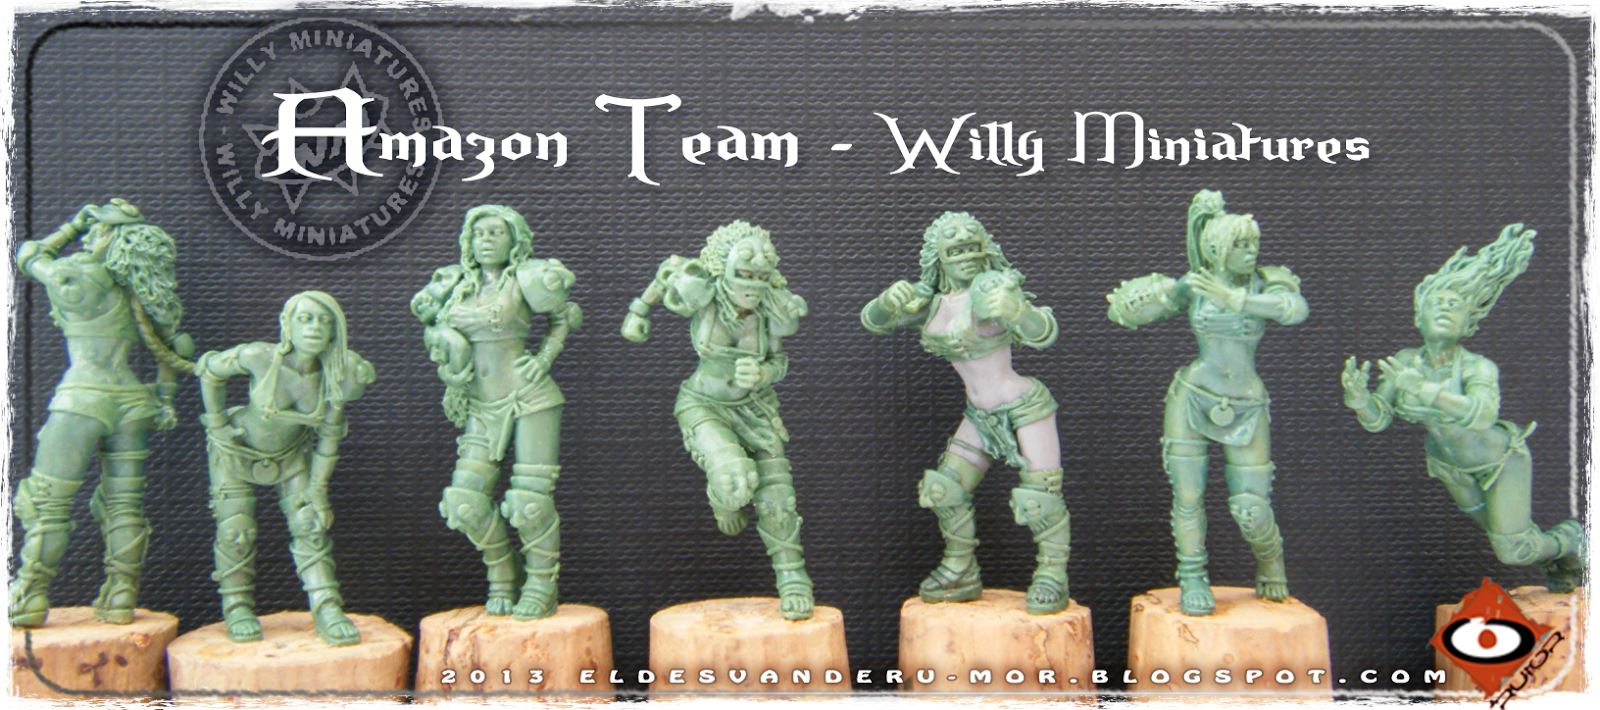 Foto de varias miniaturas del Equipo Blood Bowl de Amazonas de WILLY Miniatures hechas por ªRU-MOR. Catcher, Blitzers, thrower and linewoman, fantasy football